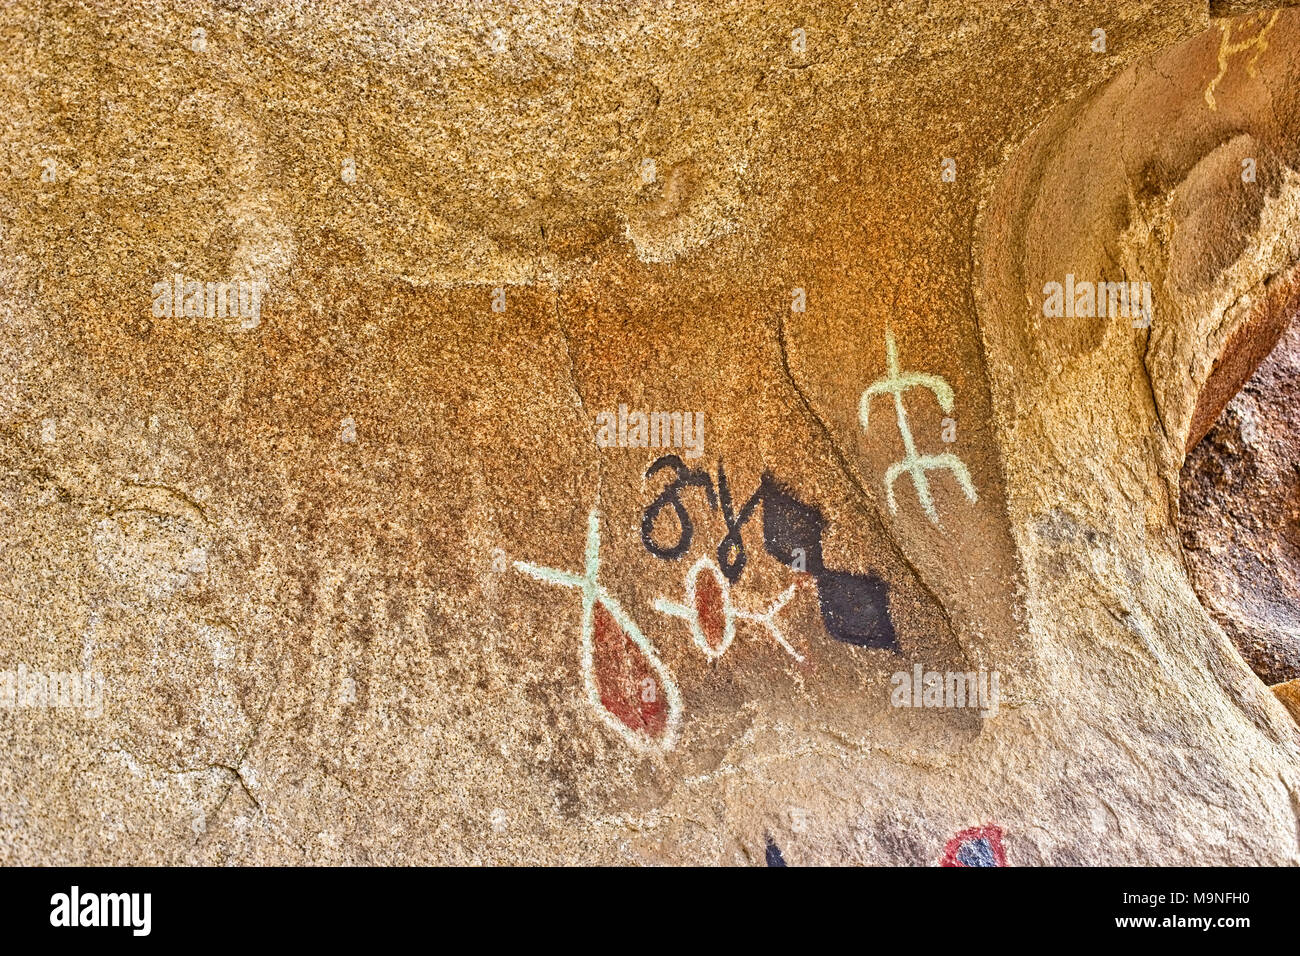 Unique Native American Petroglyphs Found In Caves In Joshua Tree